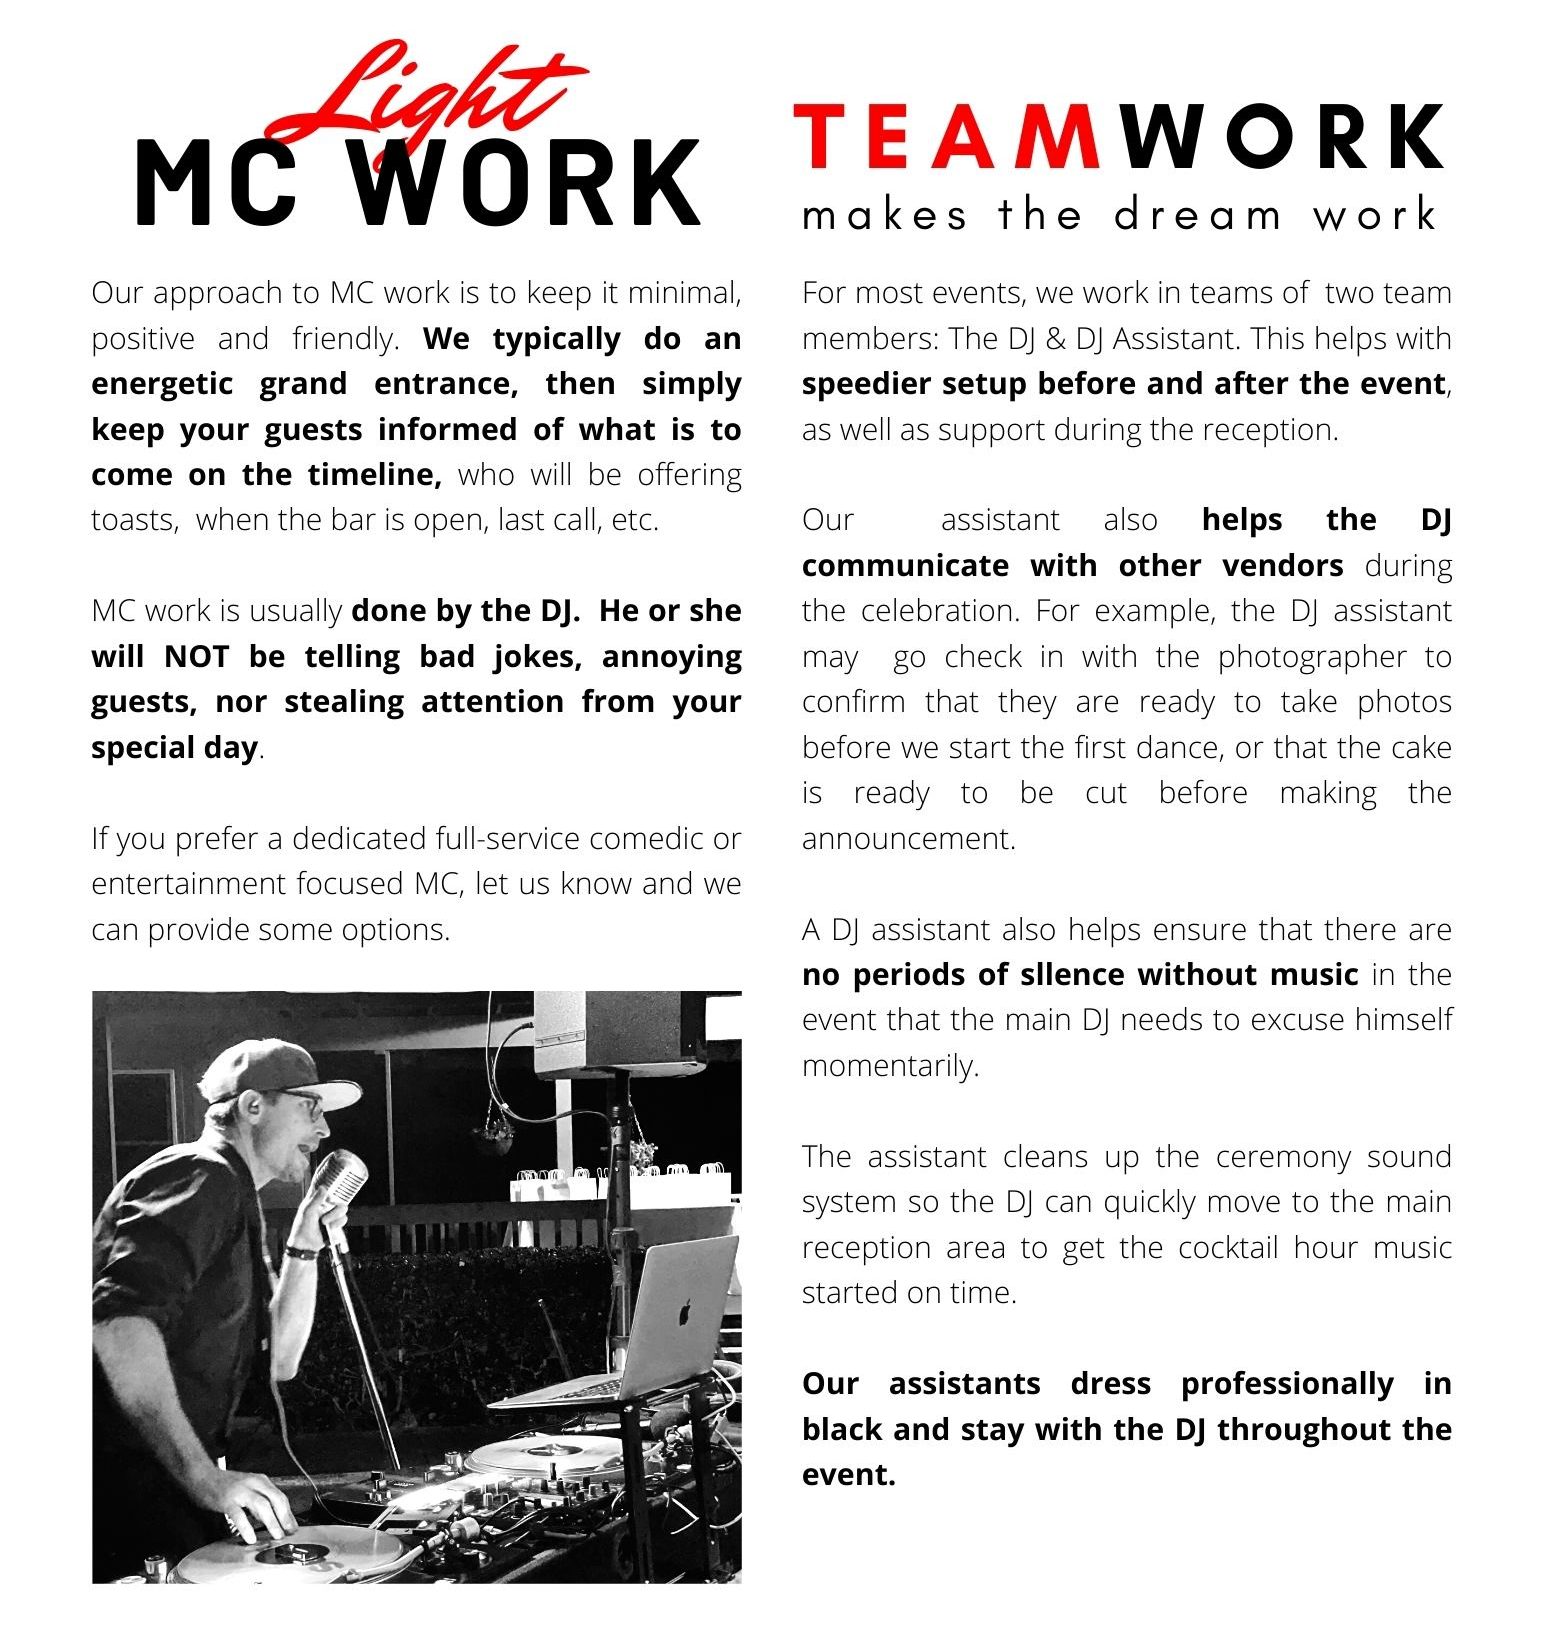 MC Work - Teamwork